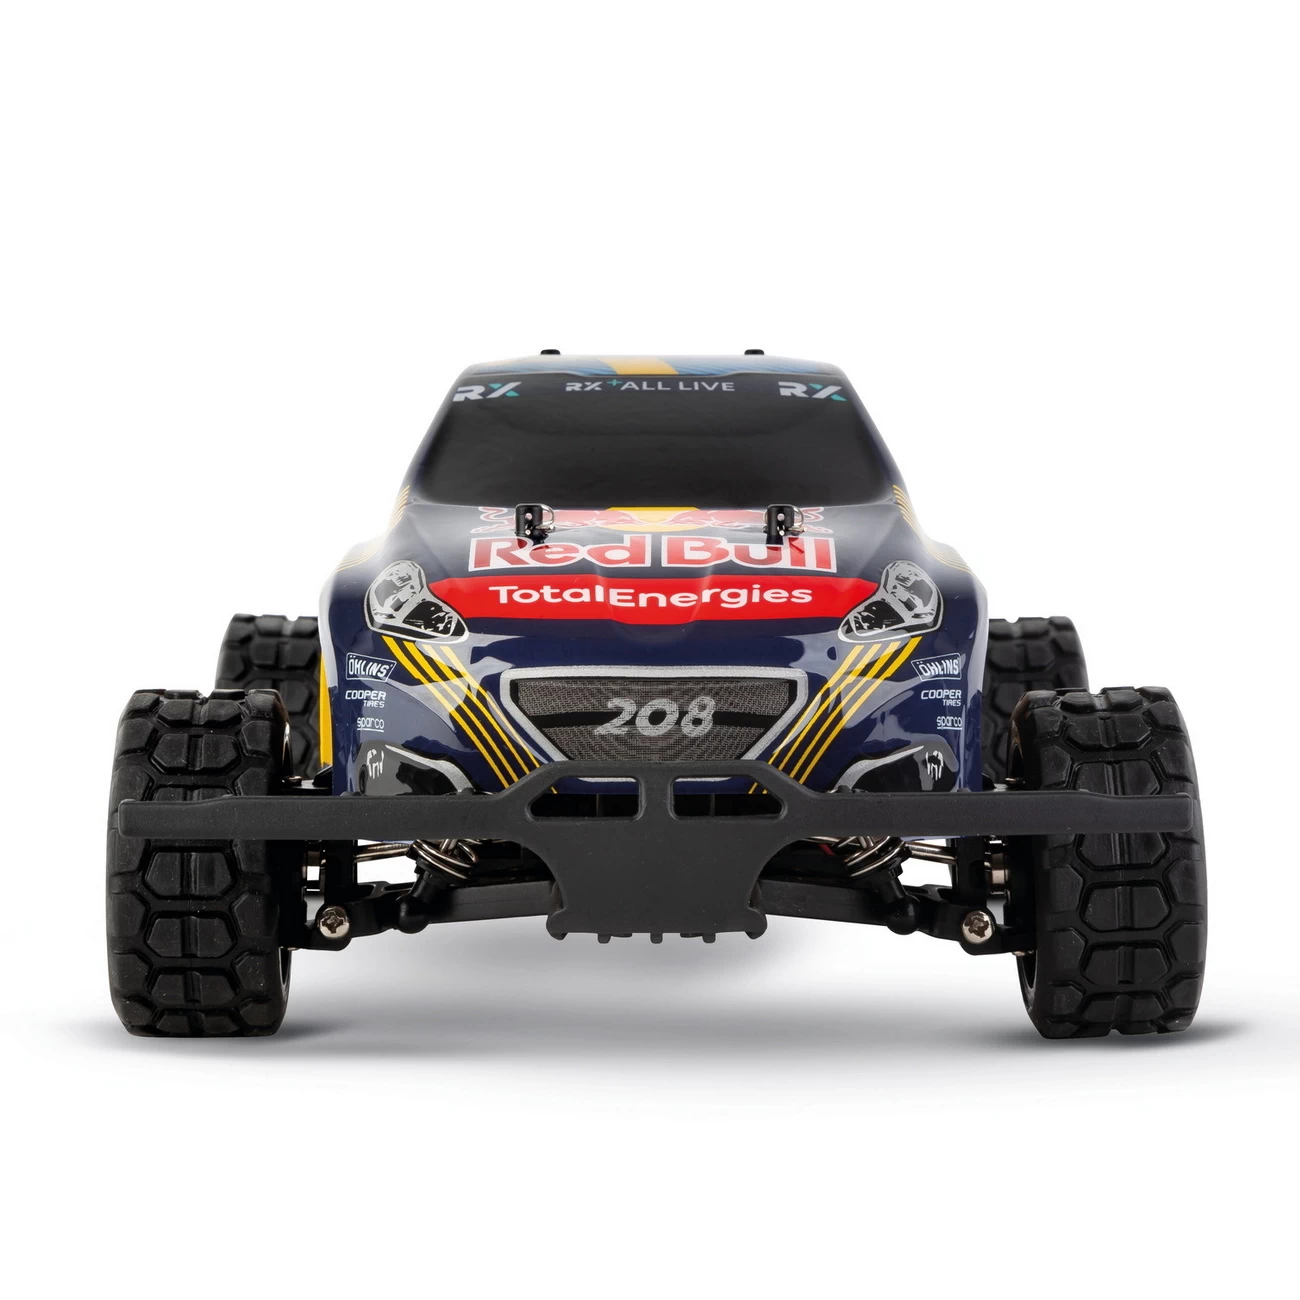 Carrera Profi RC - Red Bull Peugeot WRX 208 - Rallycross - Hansen (183022)